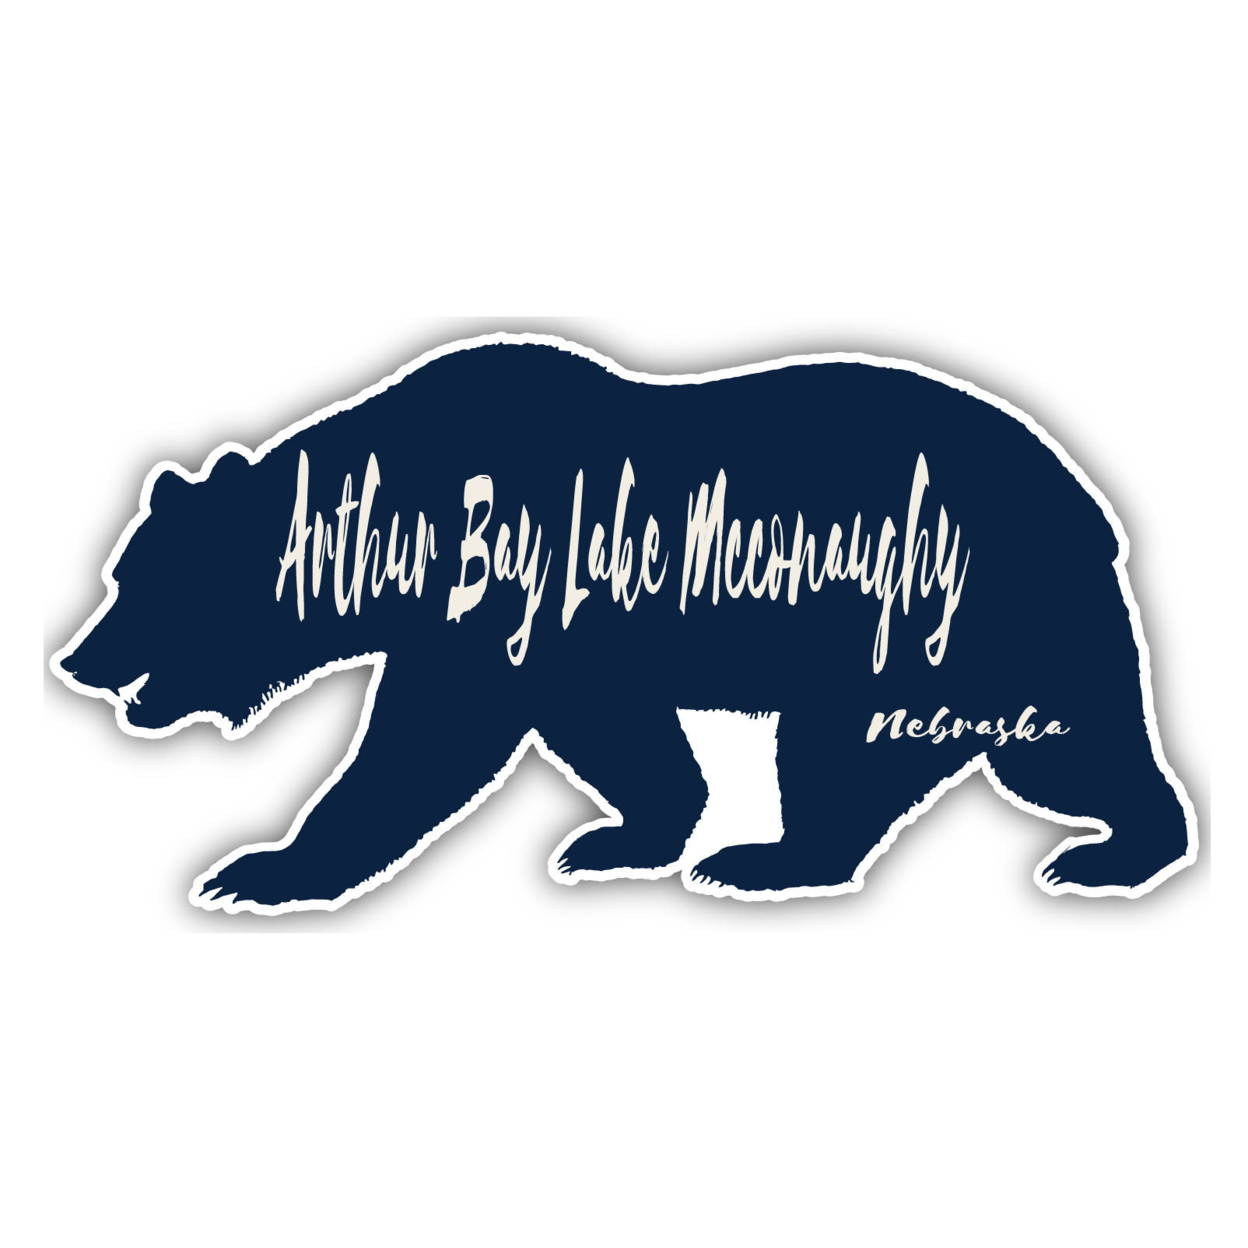 Arthur Bay Lake Mcconaughy Nebraska Souvenir Decorative Stickers (Choose Theme And Size) - 4-Pack, 2-Inch, Bear